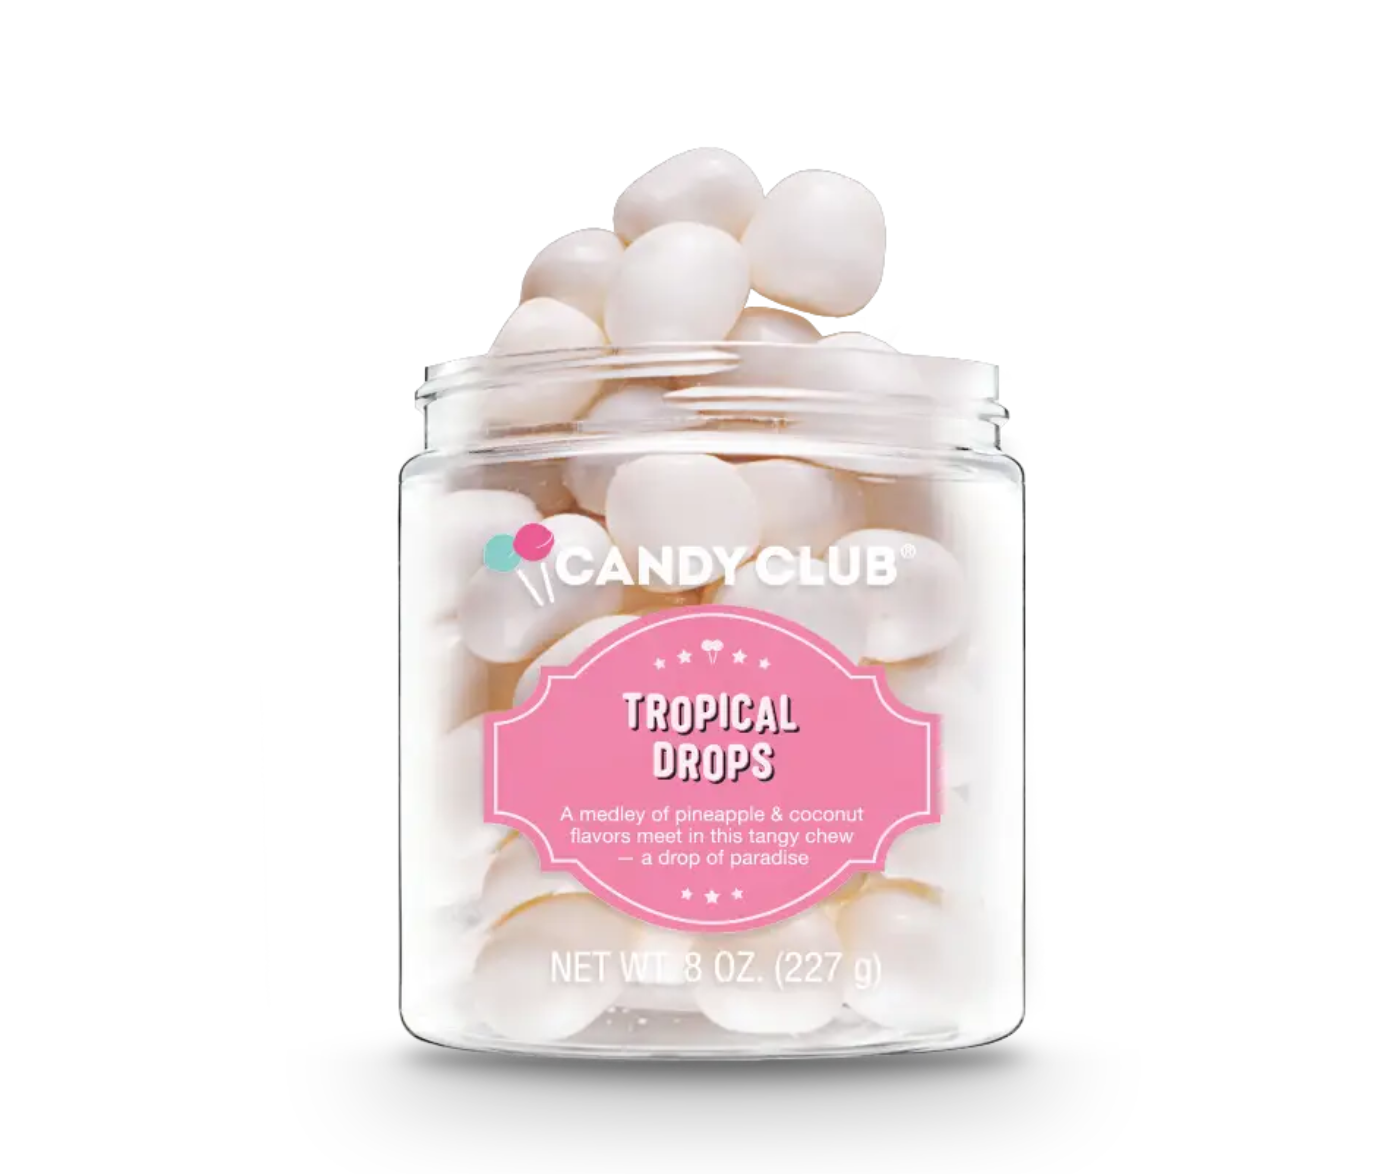 Candy Club Tropical Drops